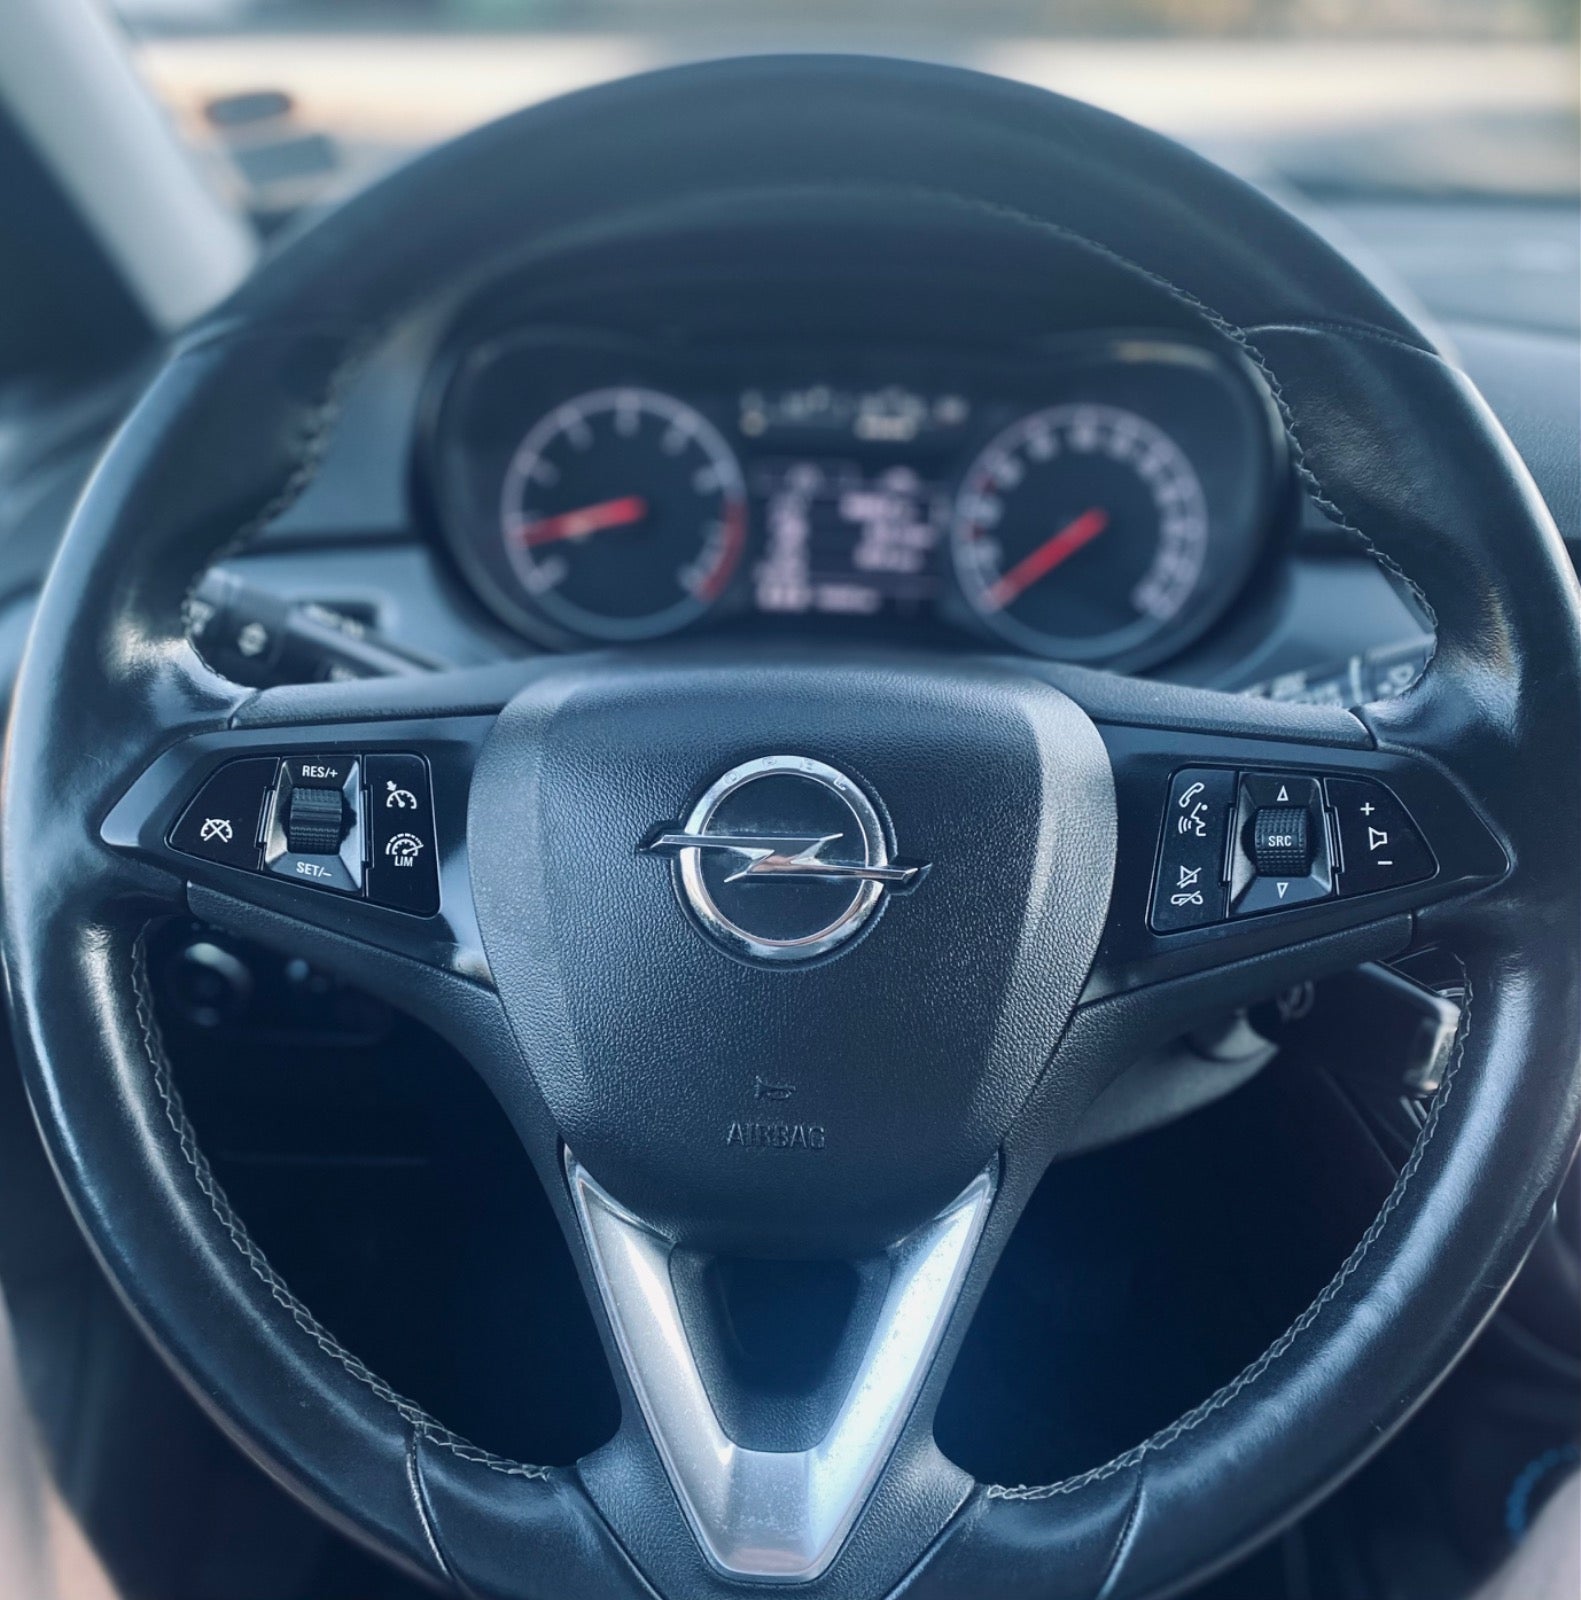 Opel Corsa 2015